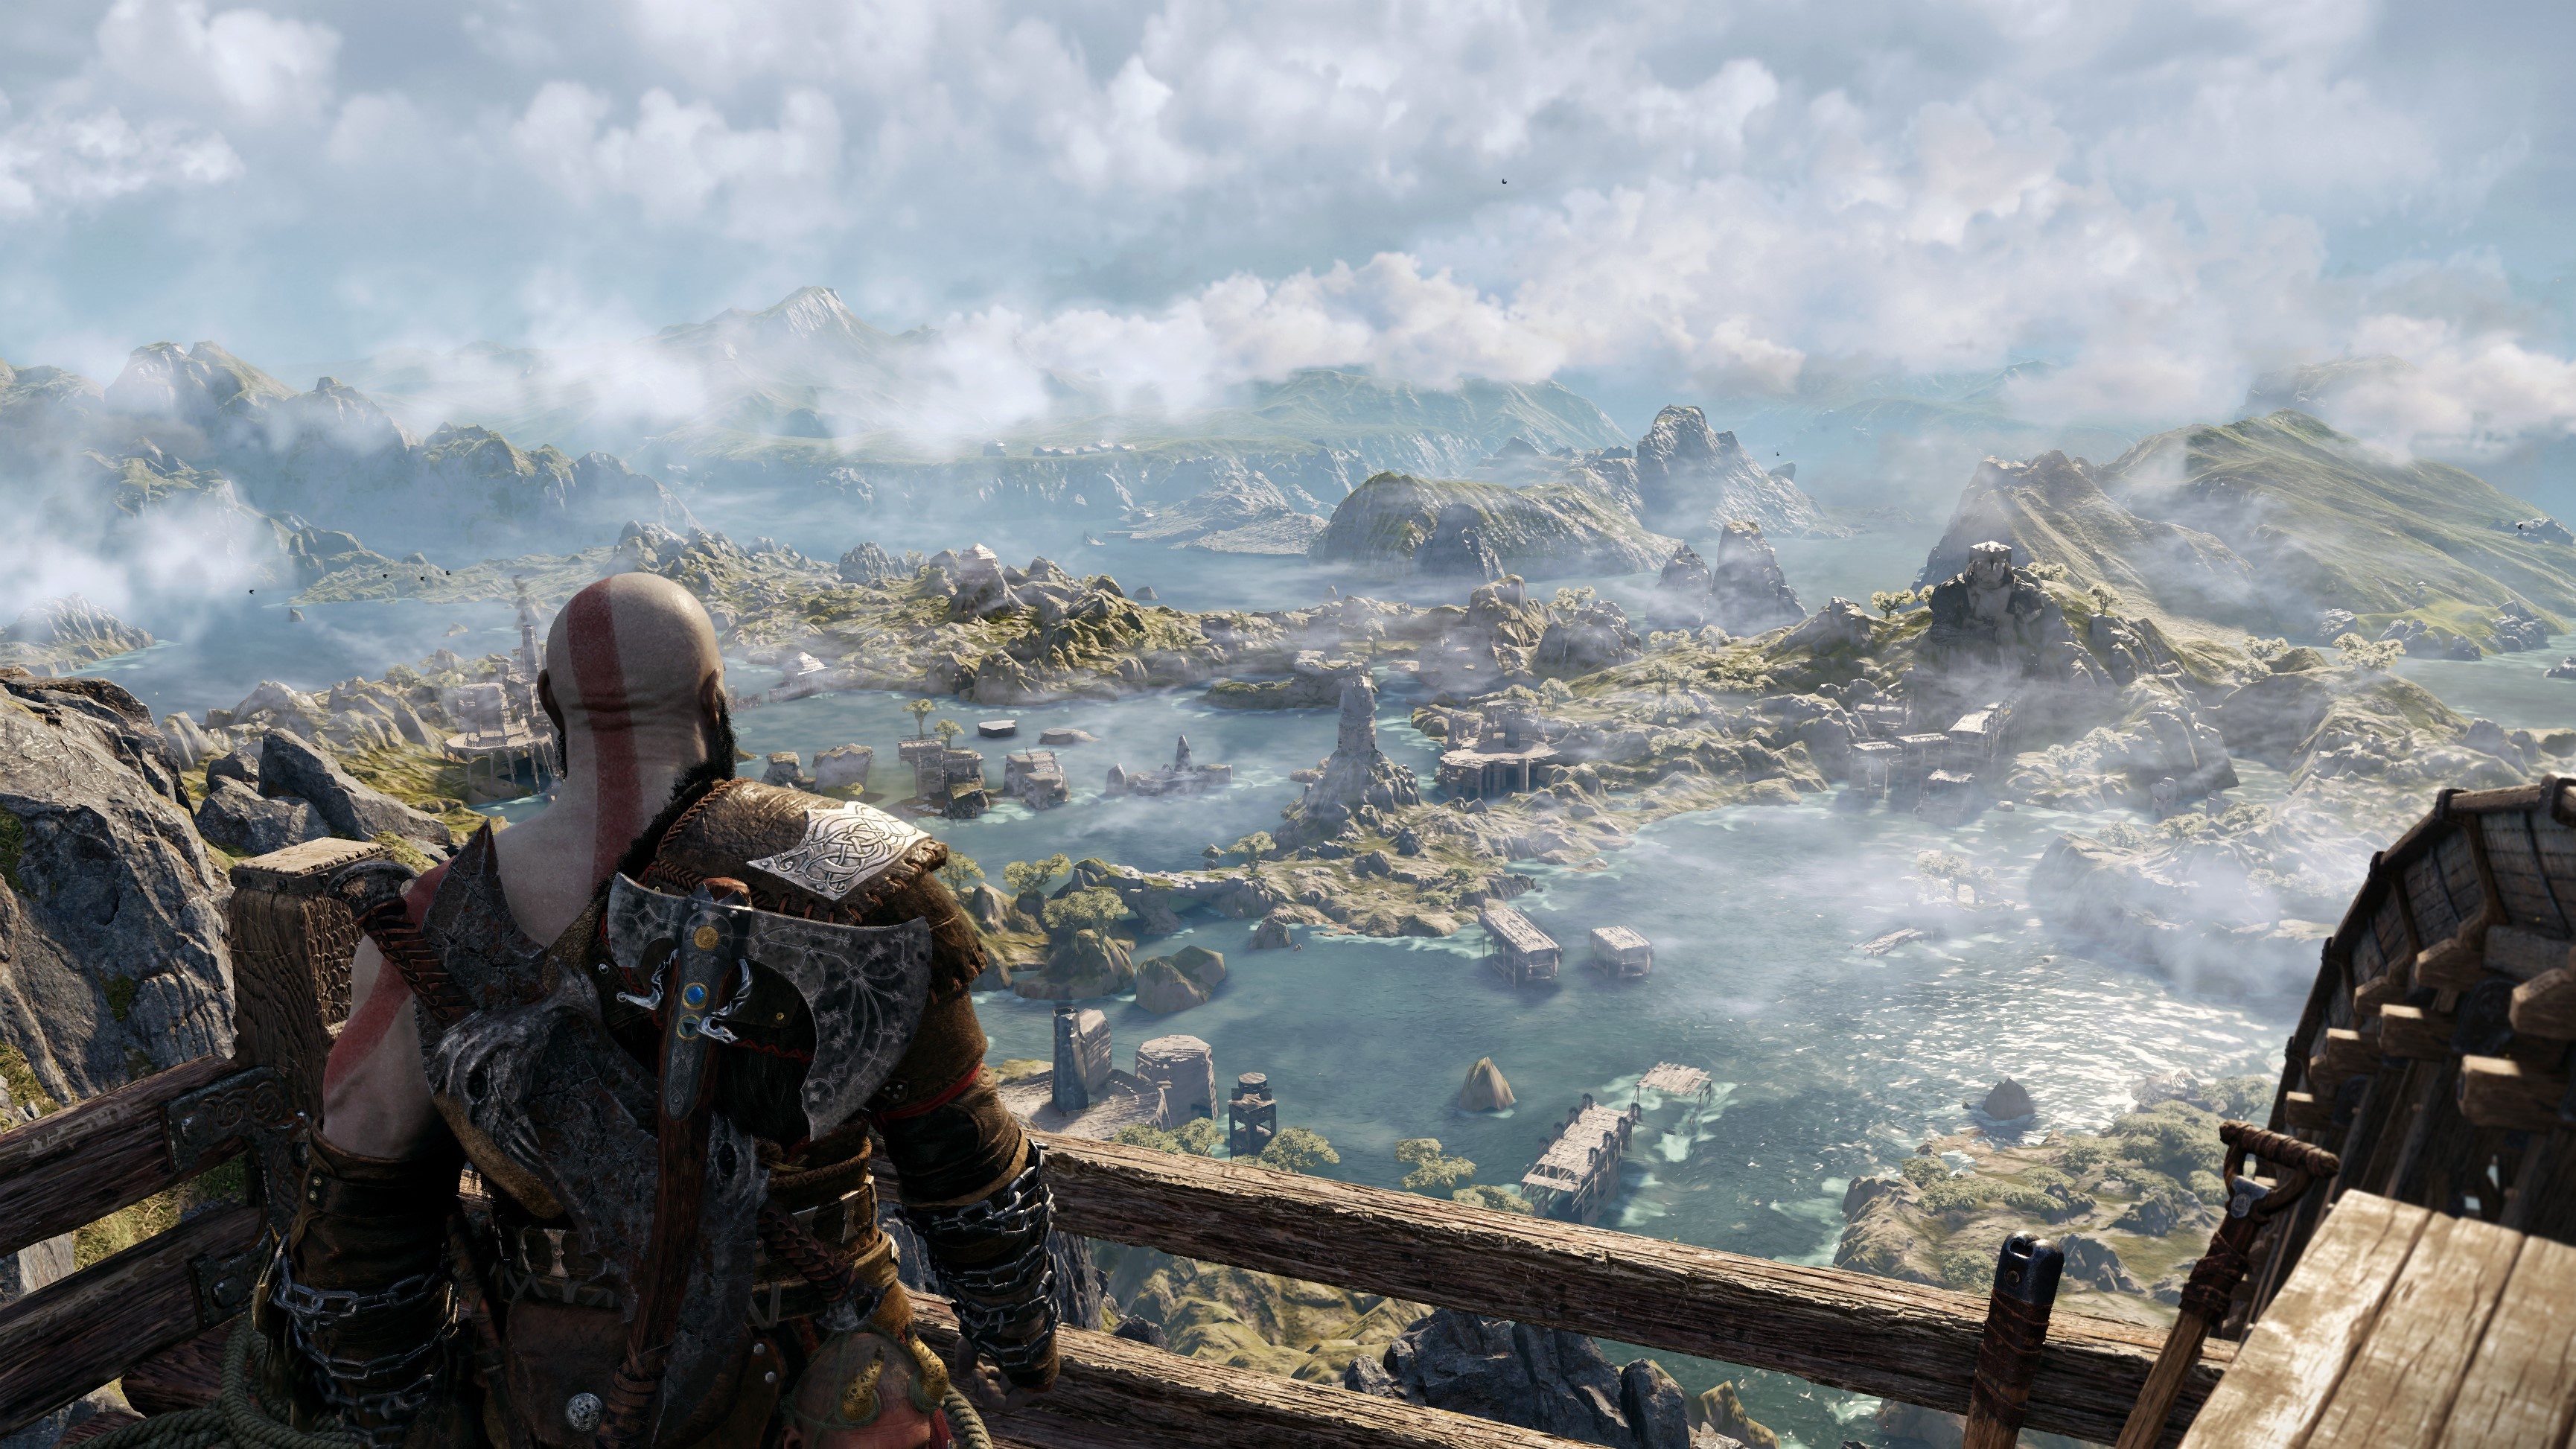 God of war: Ragnarok Kratos looks out over a rocky, cloudy landscape